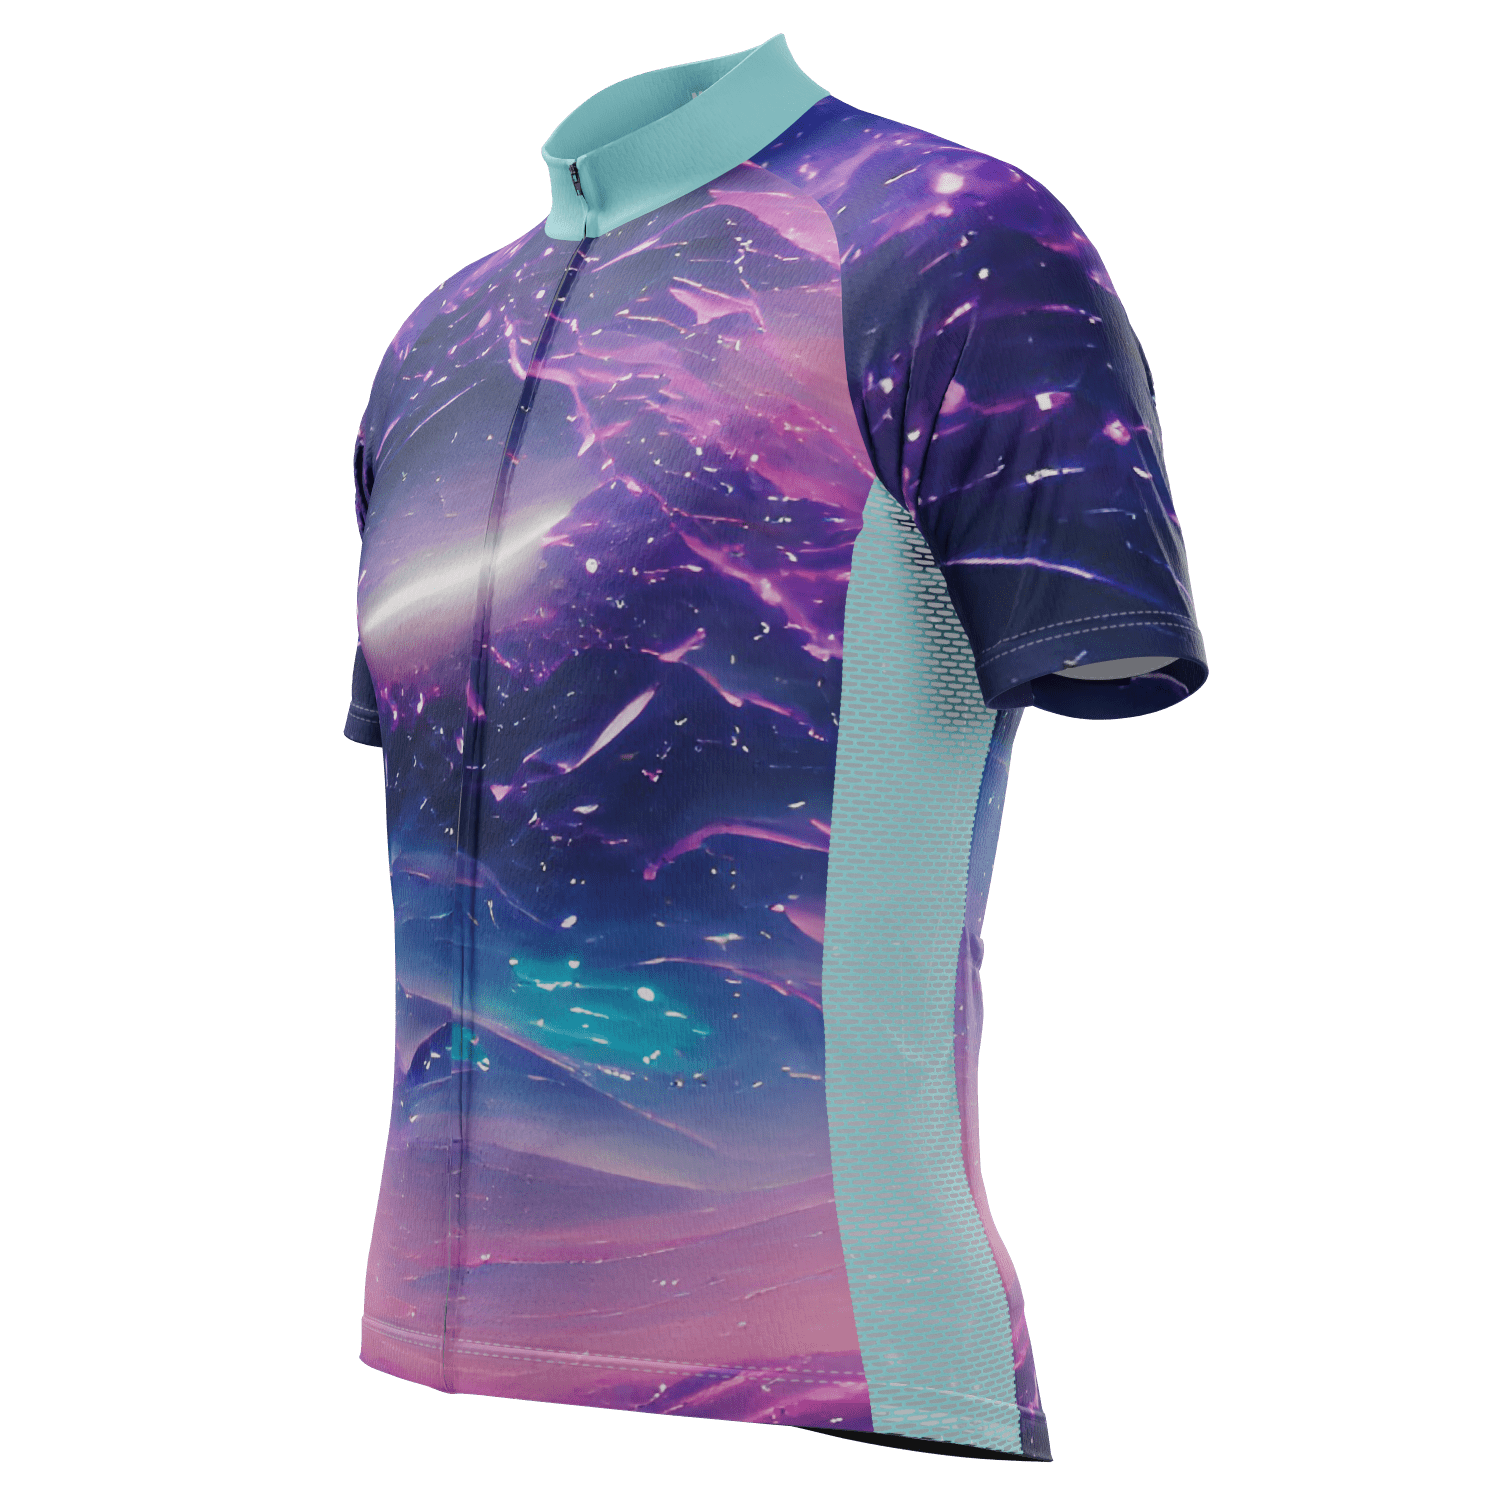 Men's Meteorite Trail Short Sleeve Cycling Jersey